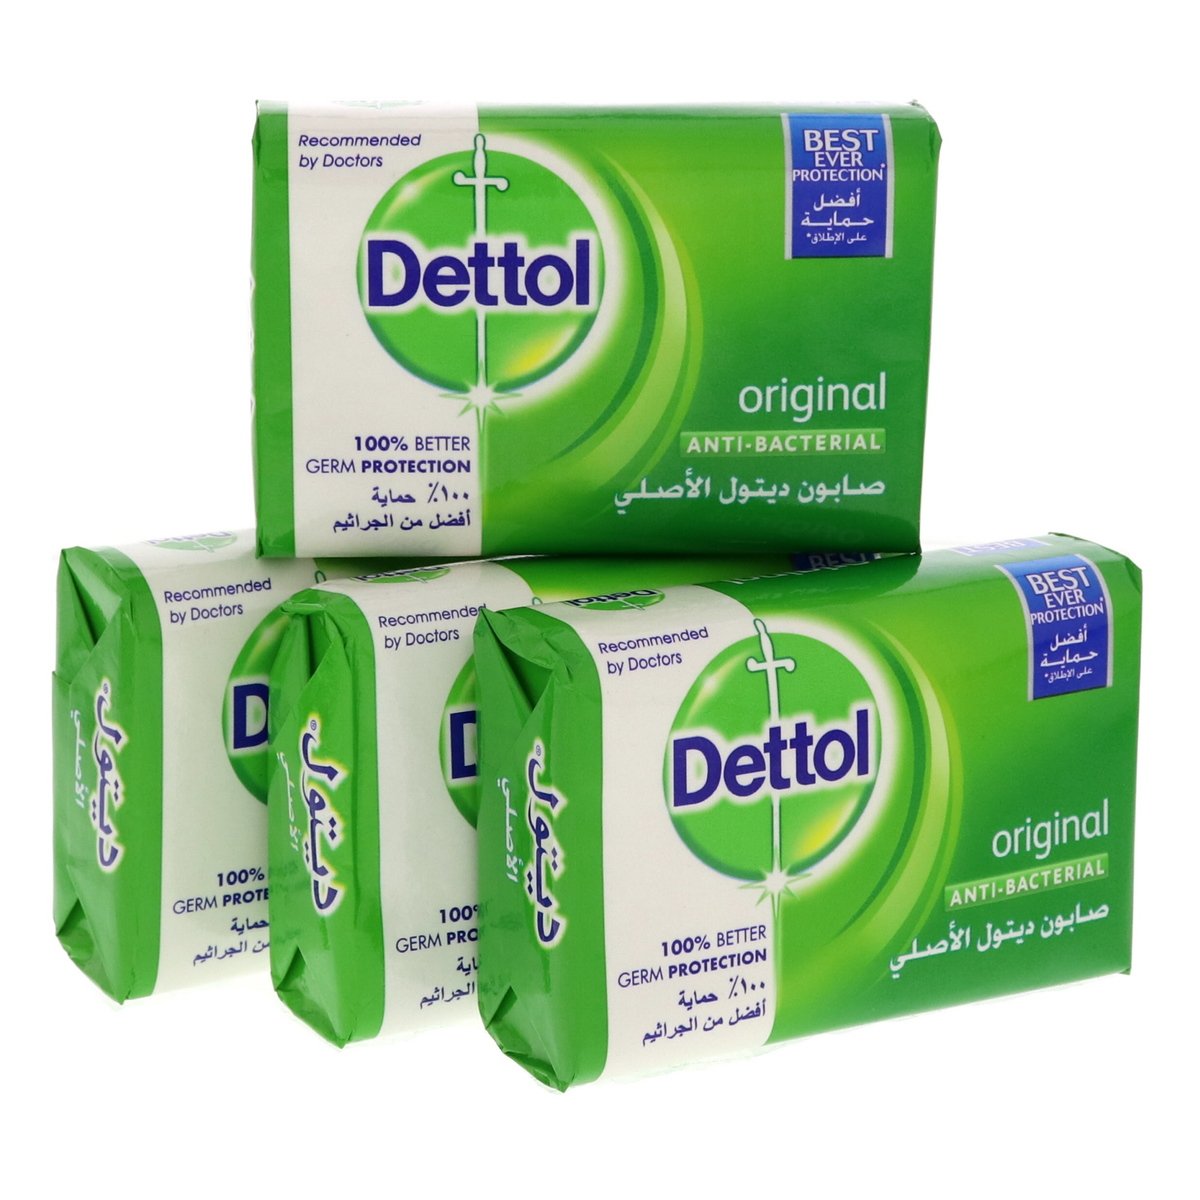 Dettol Anti-Bacterial Soap Original 4 x 120 g